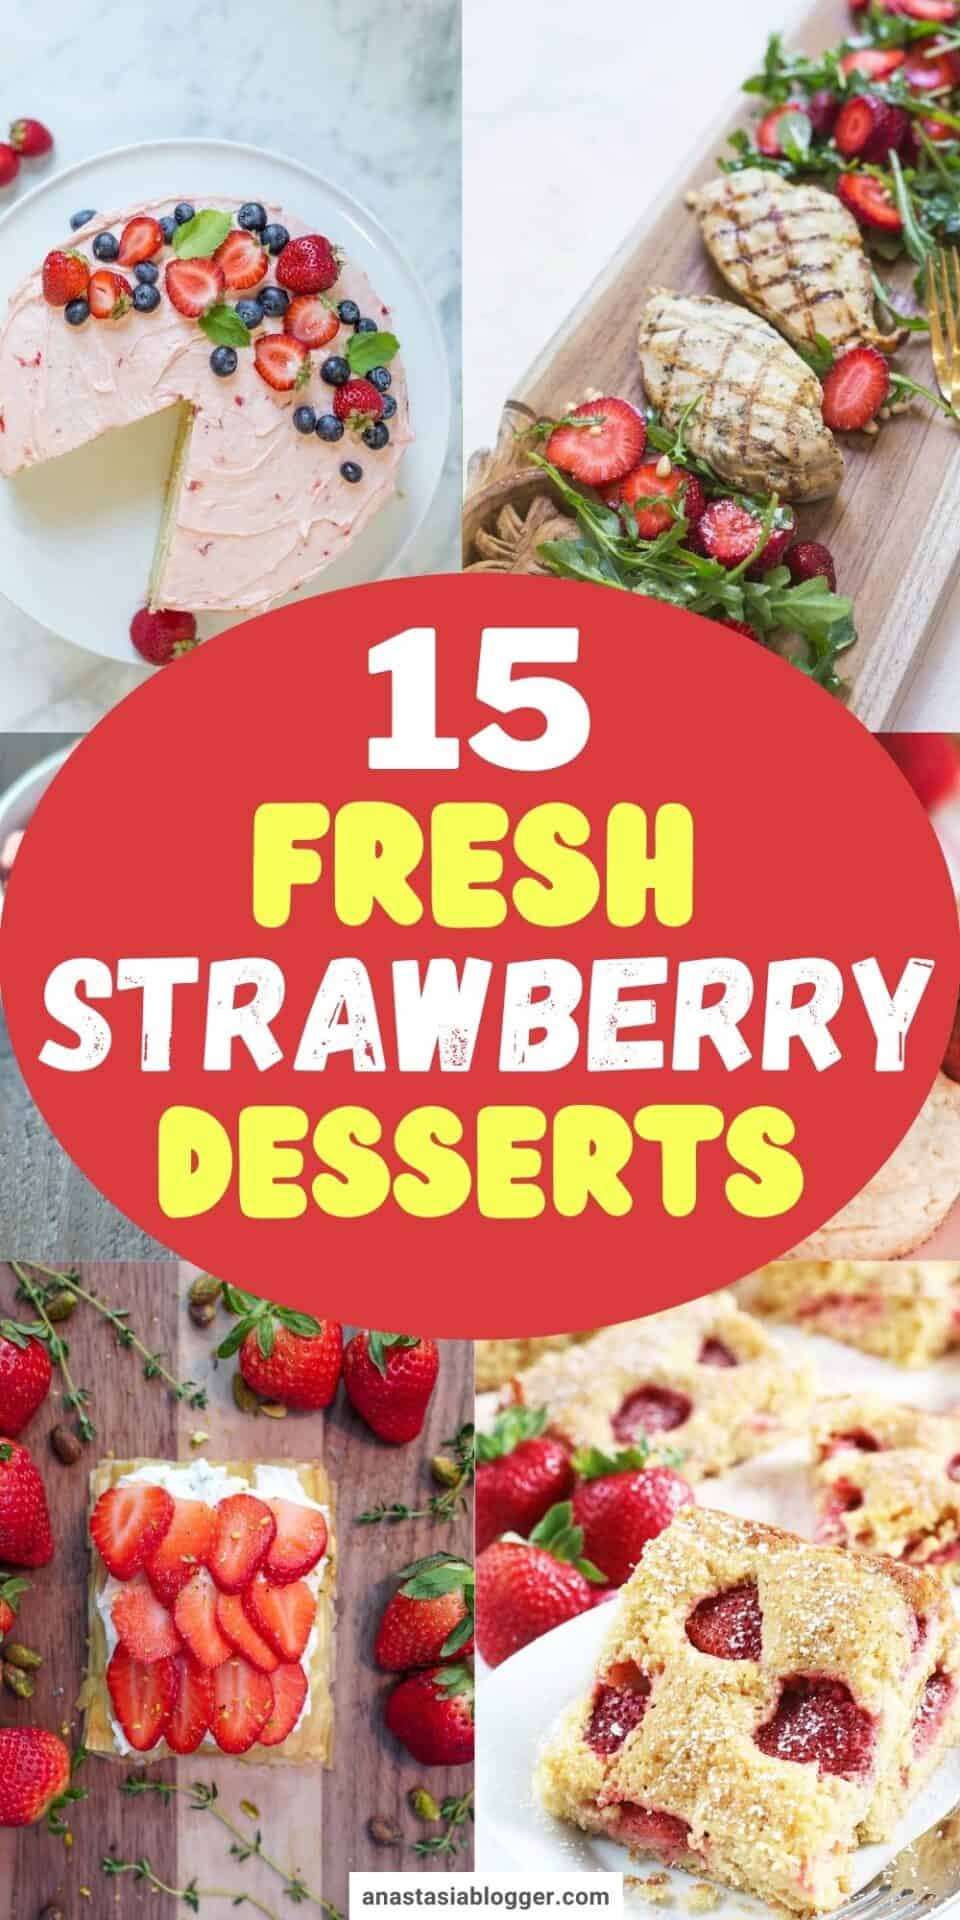 15 Fresh Strawberry Desserts | Healthy Dessert Recipes